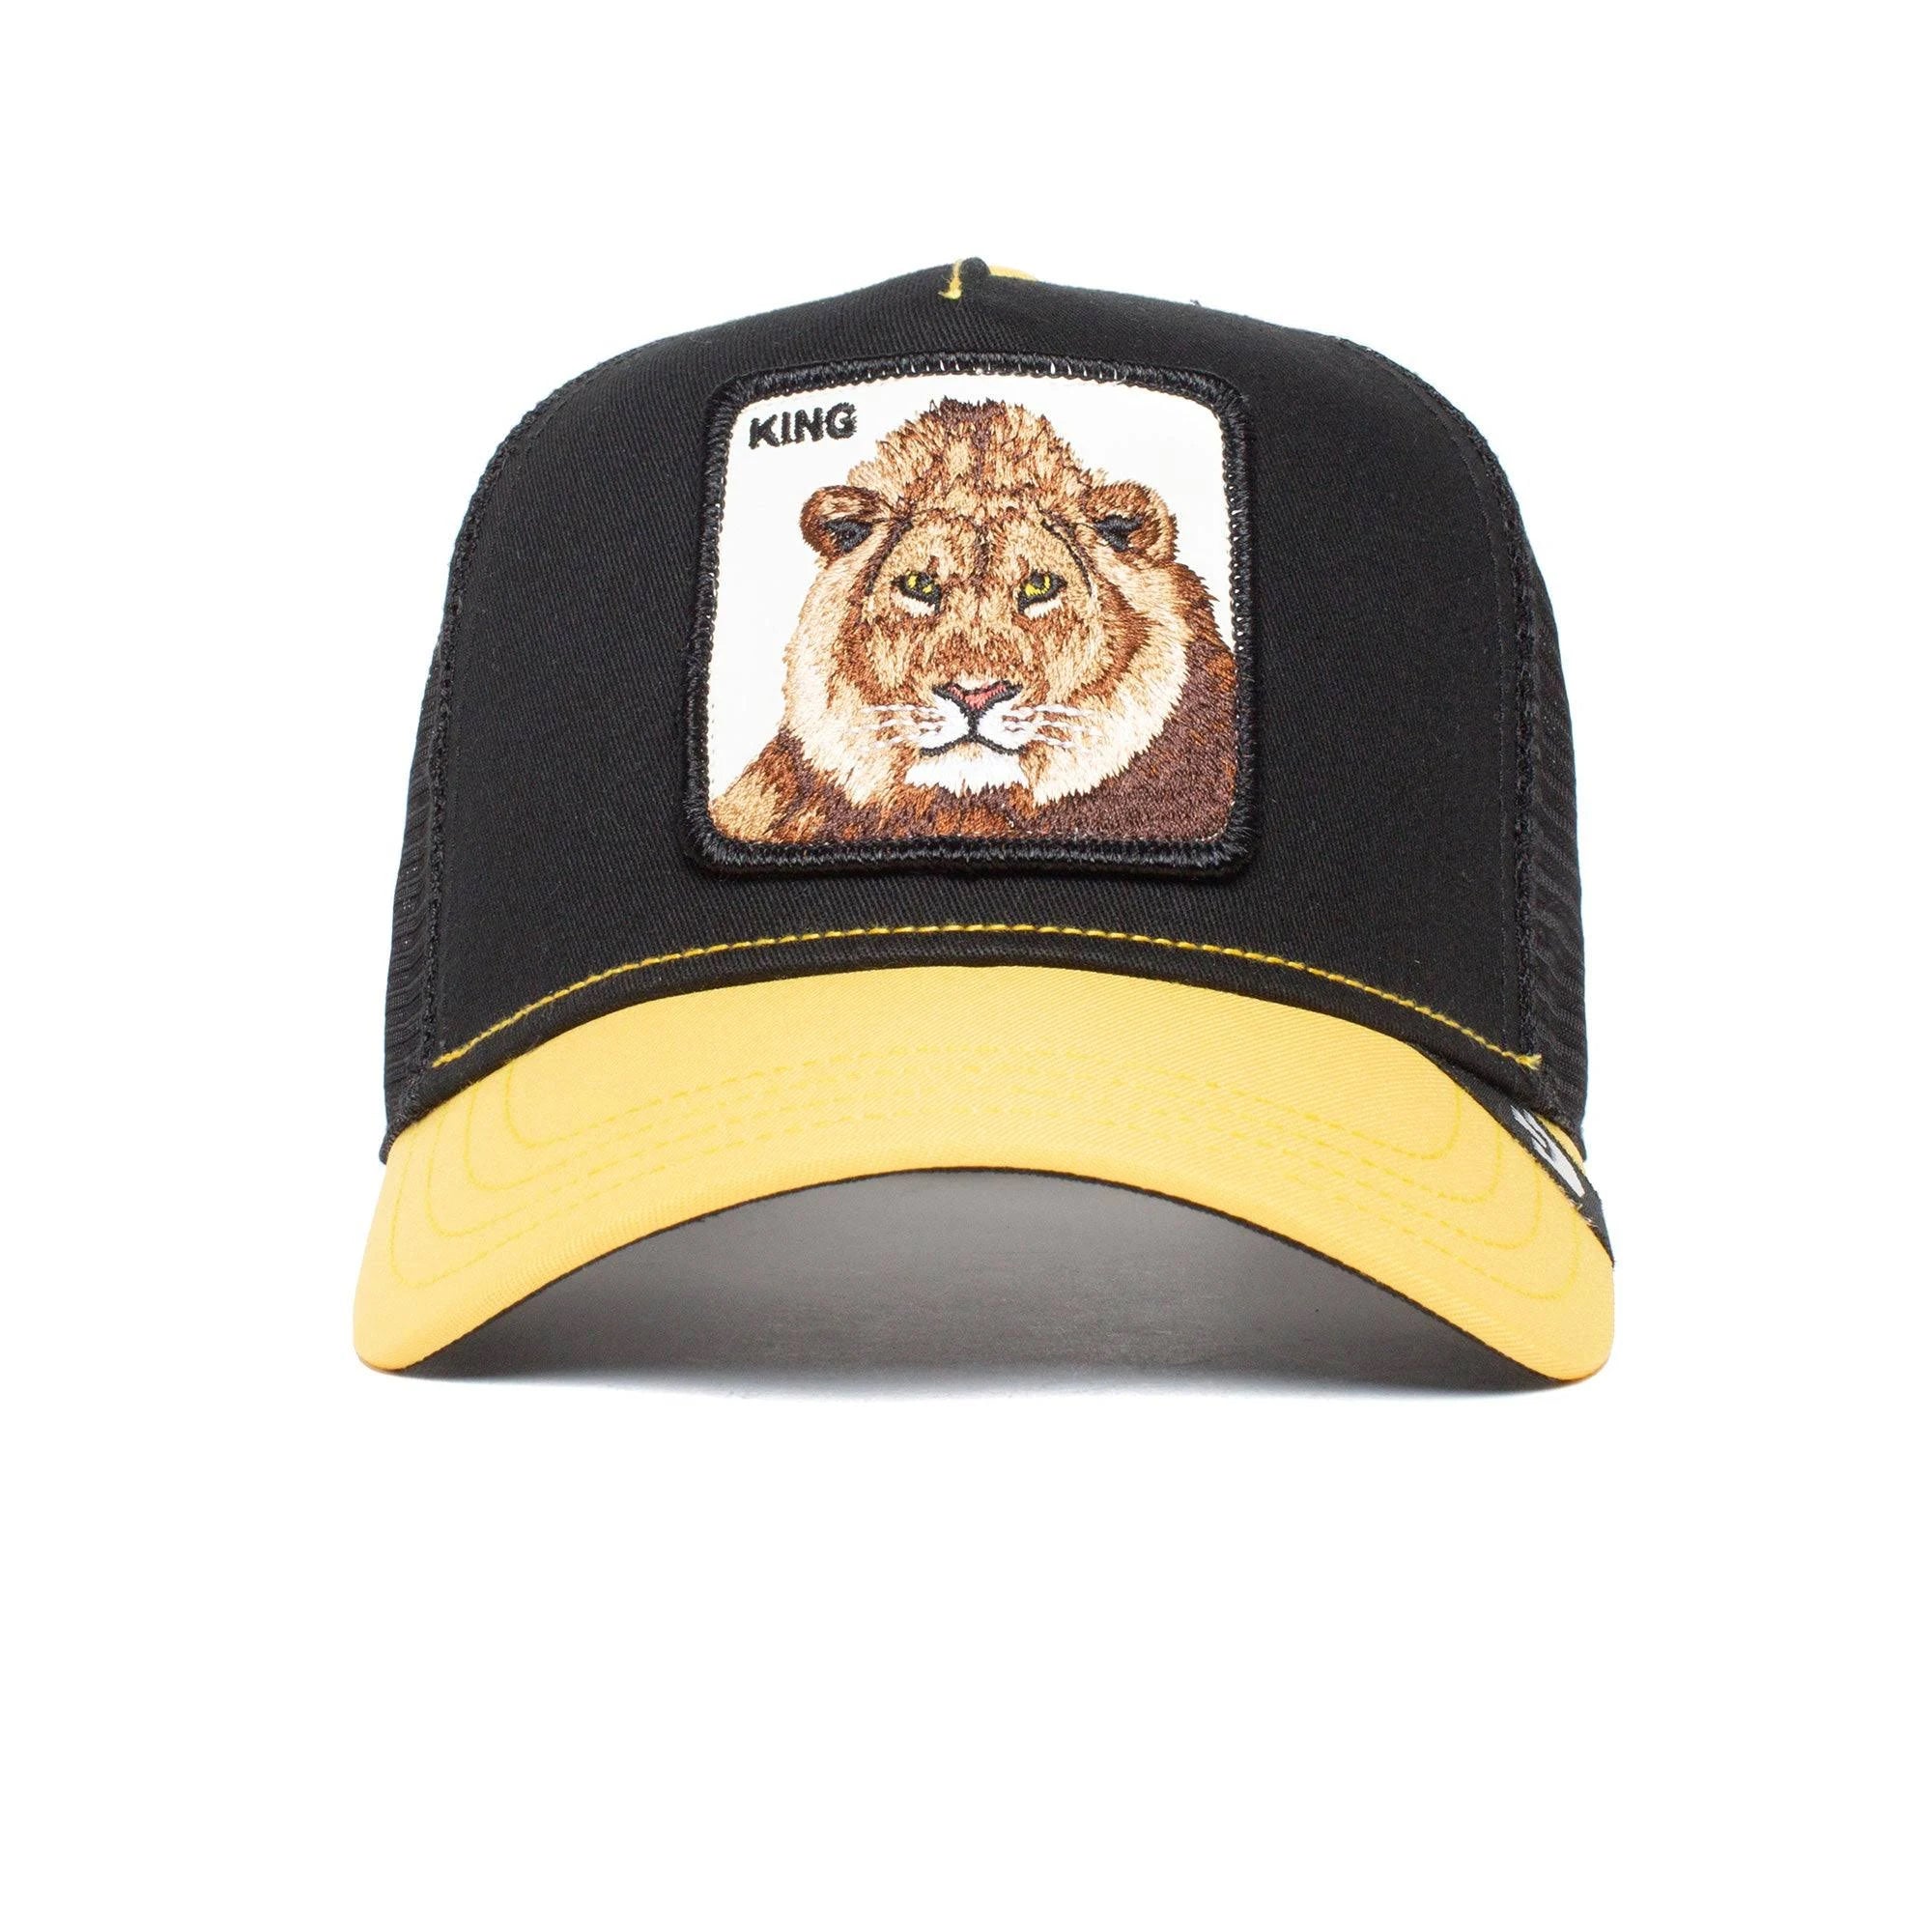 Goorin Bros - The King Lion Trucker Cap - Gold/Black